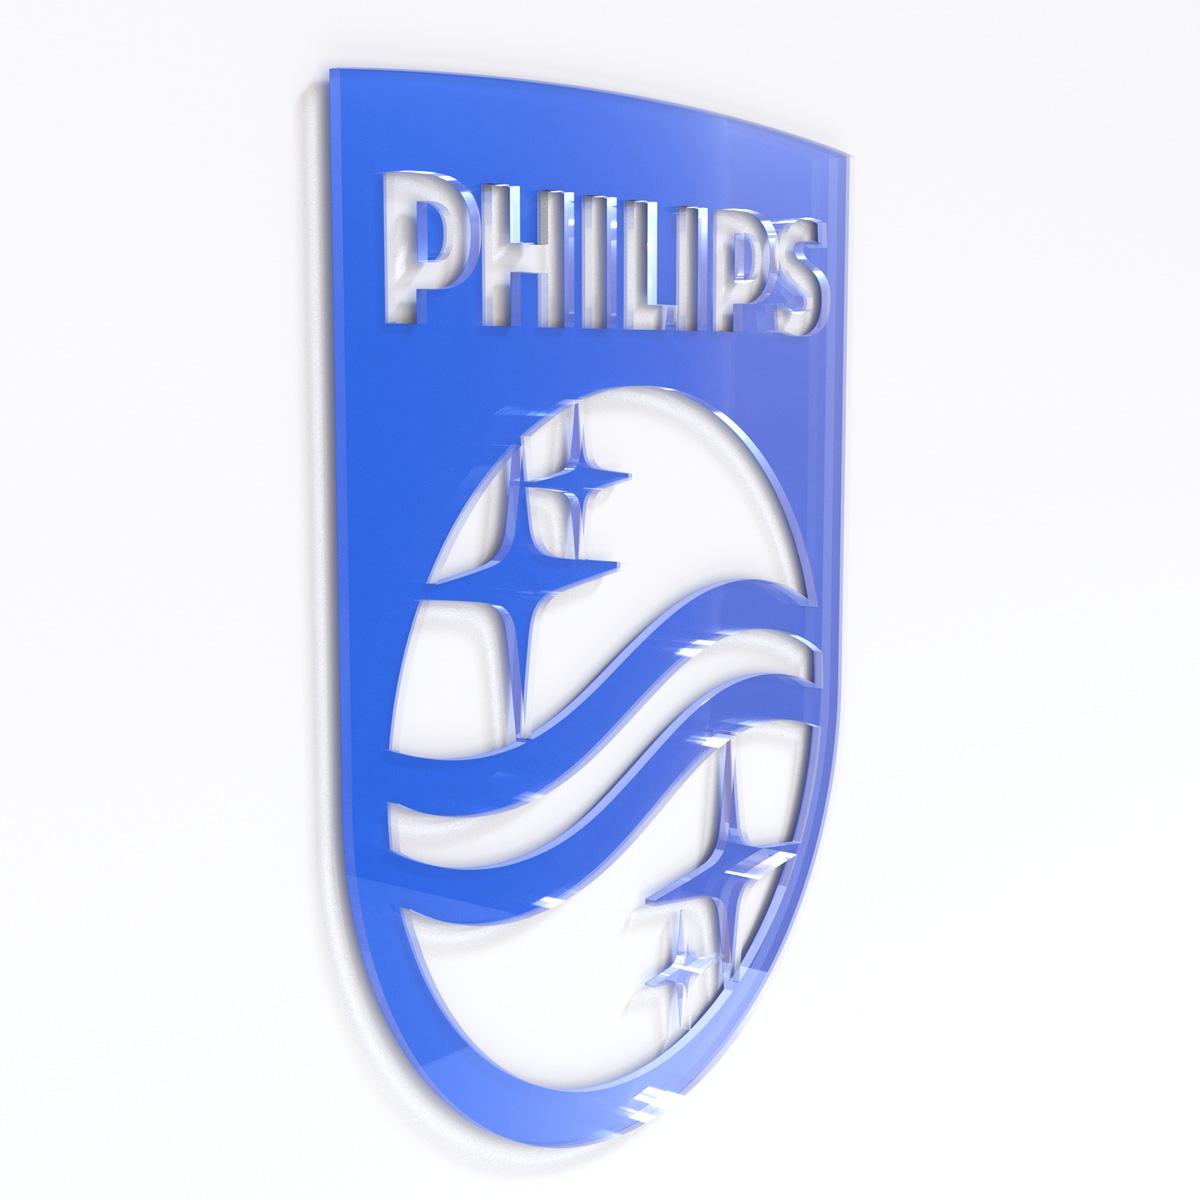 Philips logo reception sign